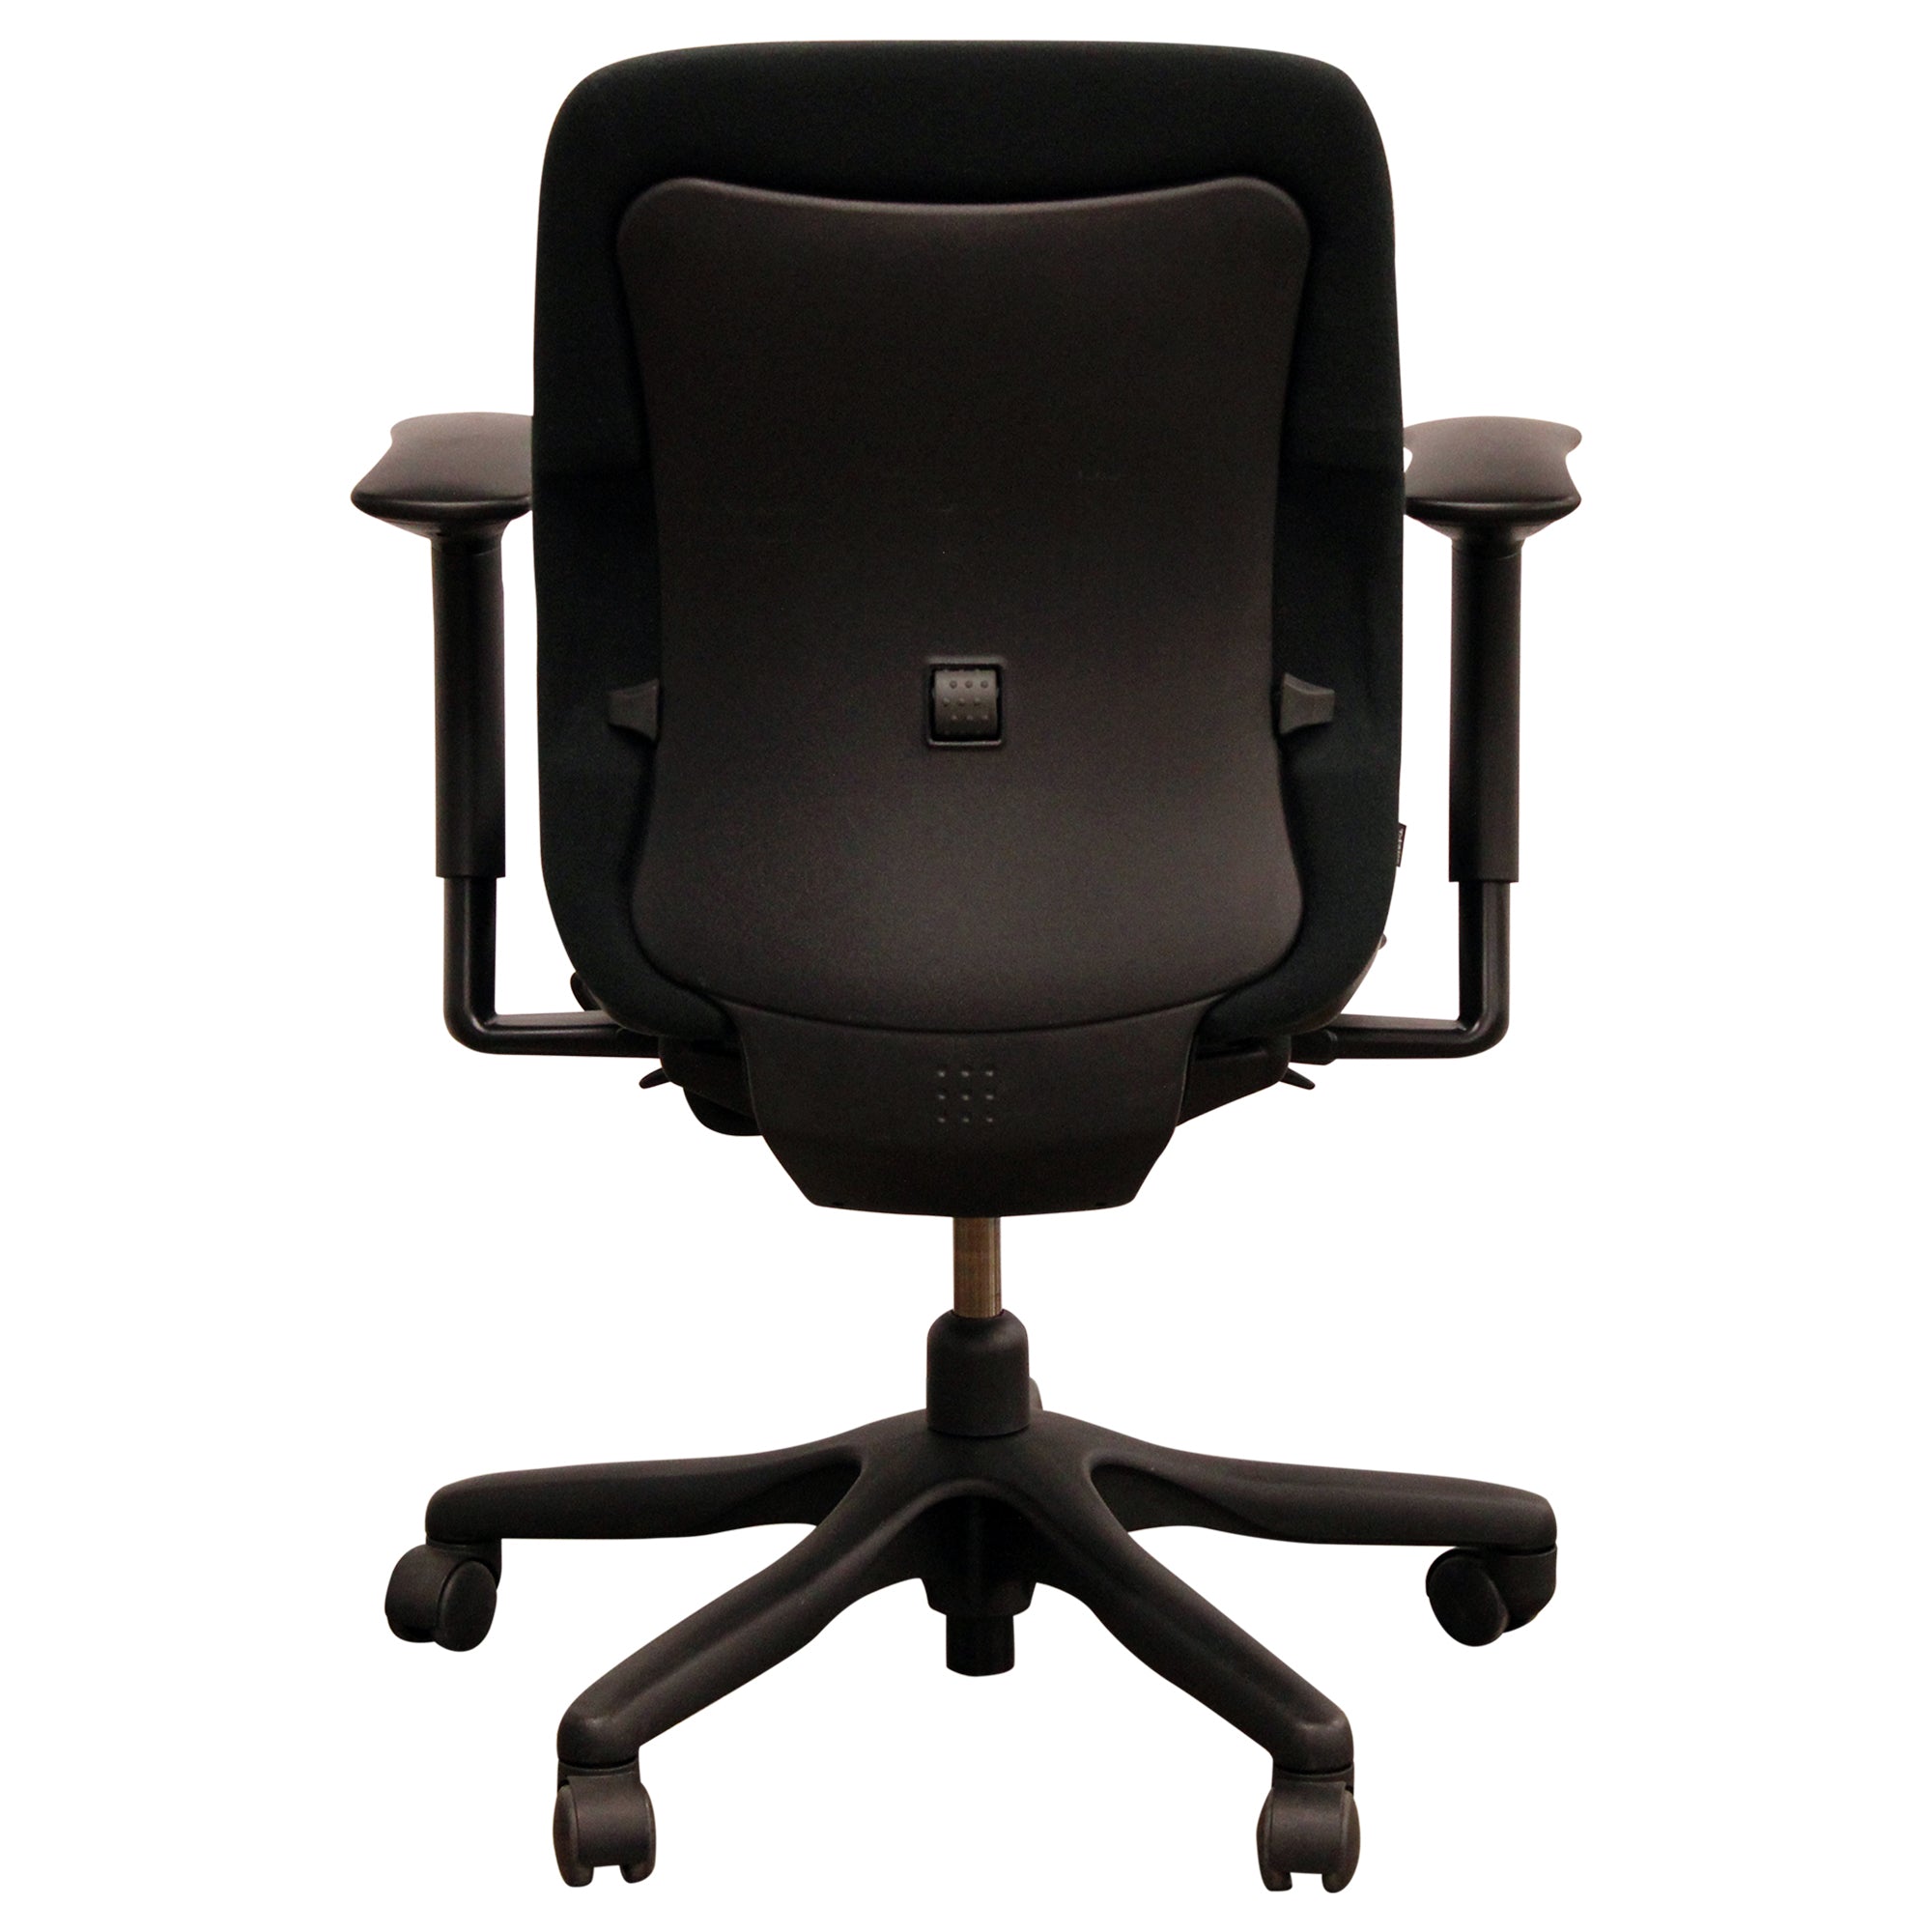 Teknion Amicus Task Chair, Black - Preowned